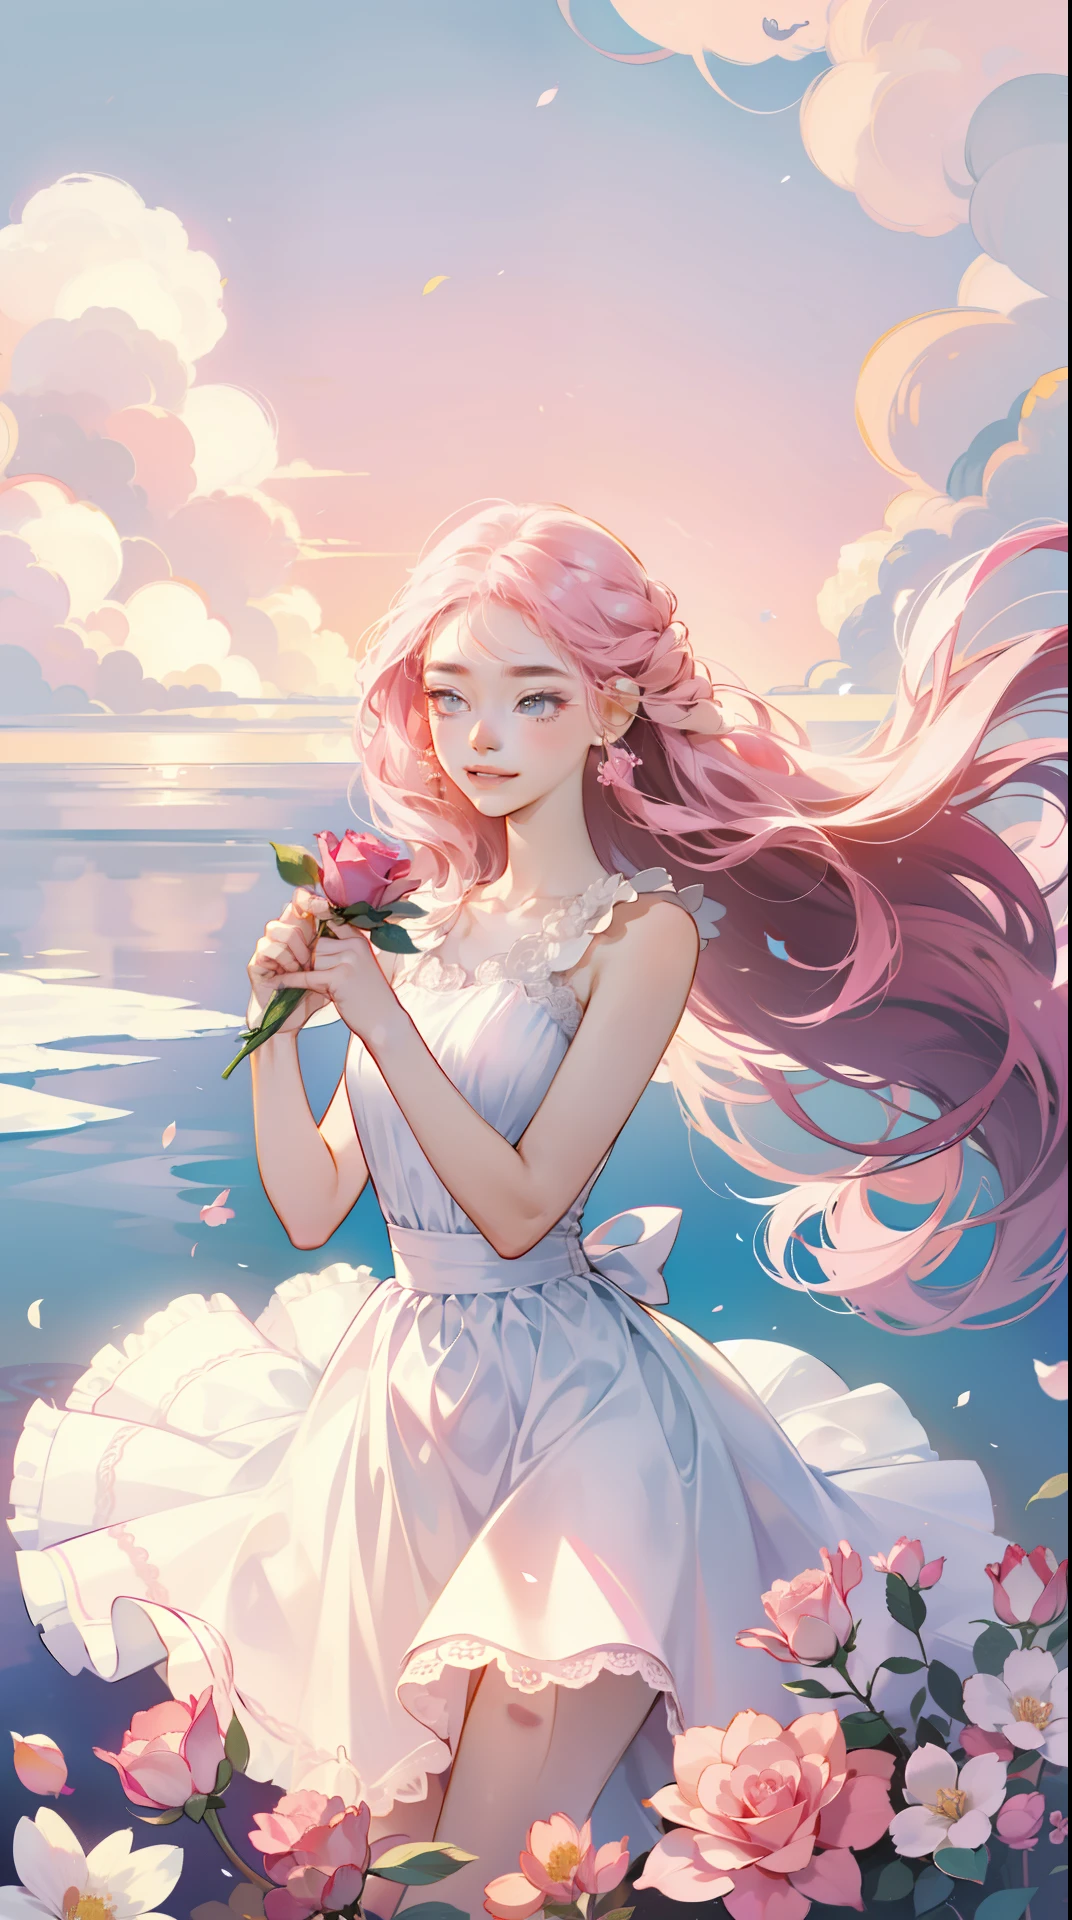 An 18 year old girl is wearing a 粉色的 rose, 长发, 白色无袖连衣裙, holding a 粉色的 rose. 闻着花香, 明亮的幻想, 超现实主义, 迈克尔·科马克, 粉色的, 单色的宁静, 明亮的气氛, 阳光, 幸福, 幸福, 和一个微笑,